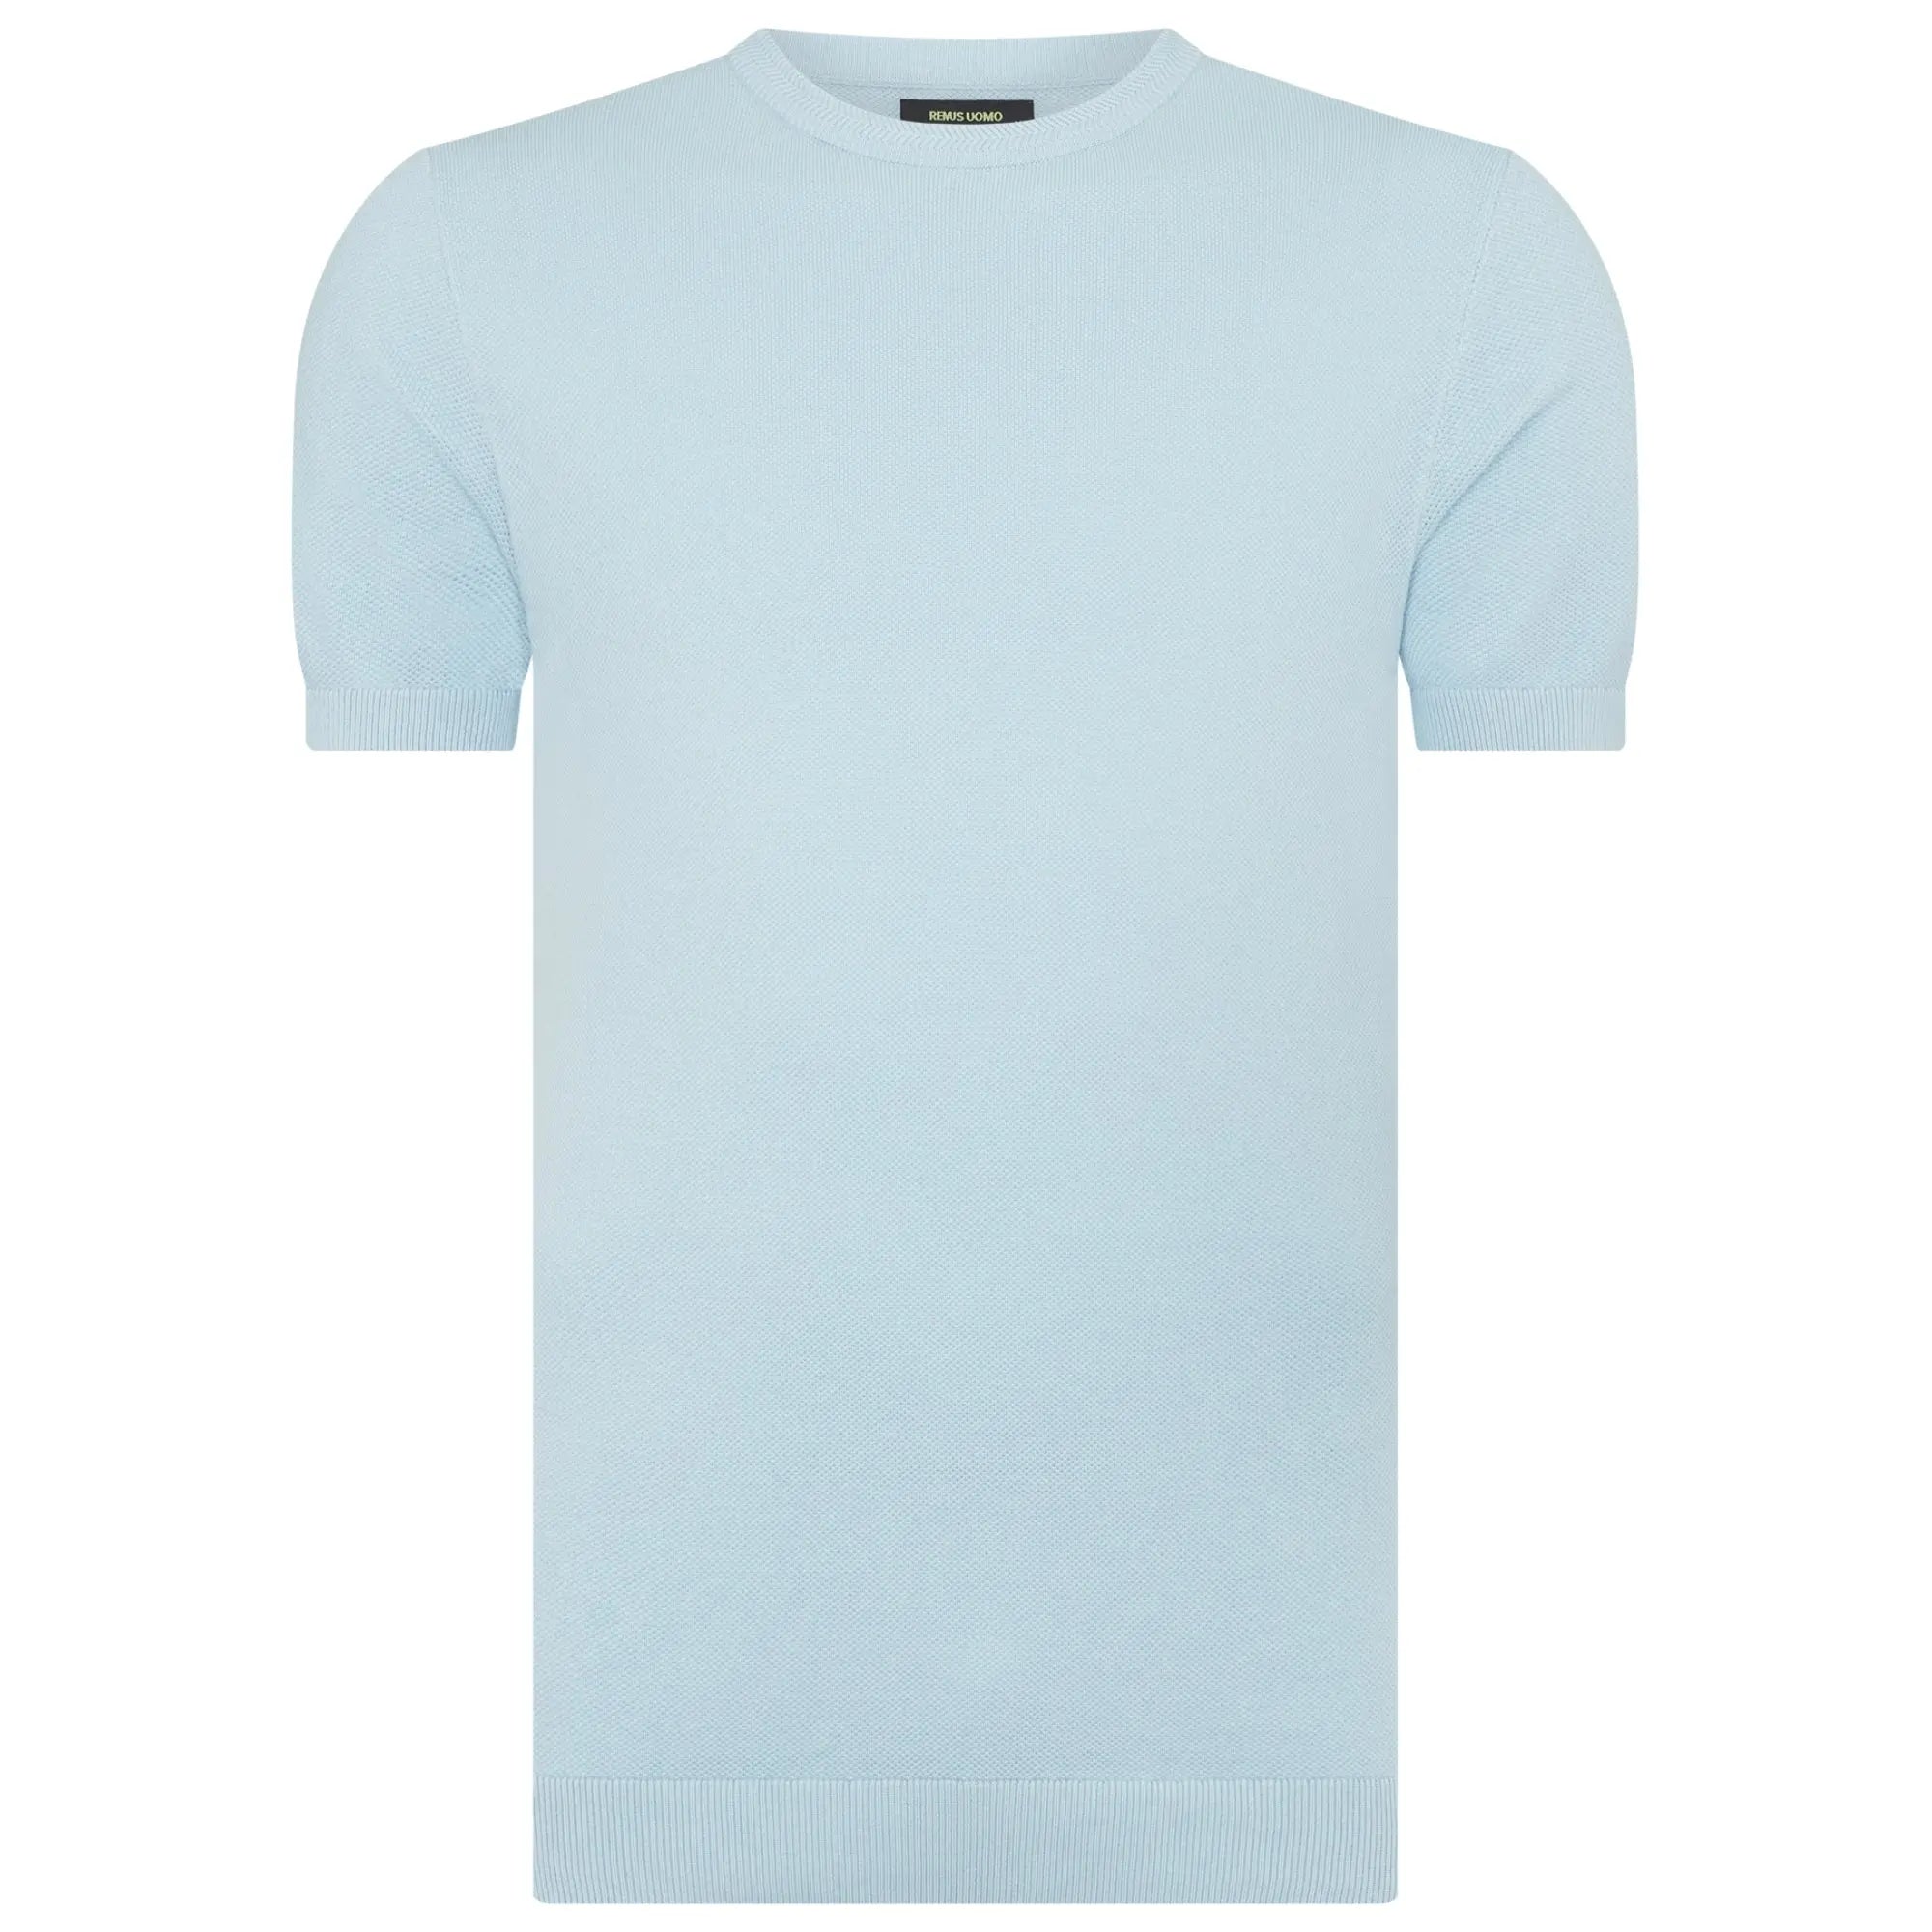 Remus Uomo Textured Cotton T-shirt - Sky Blue